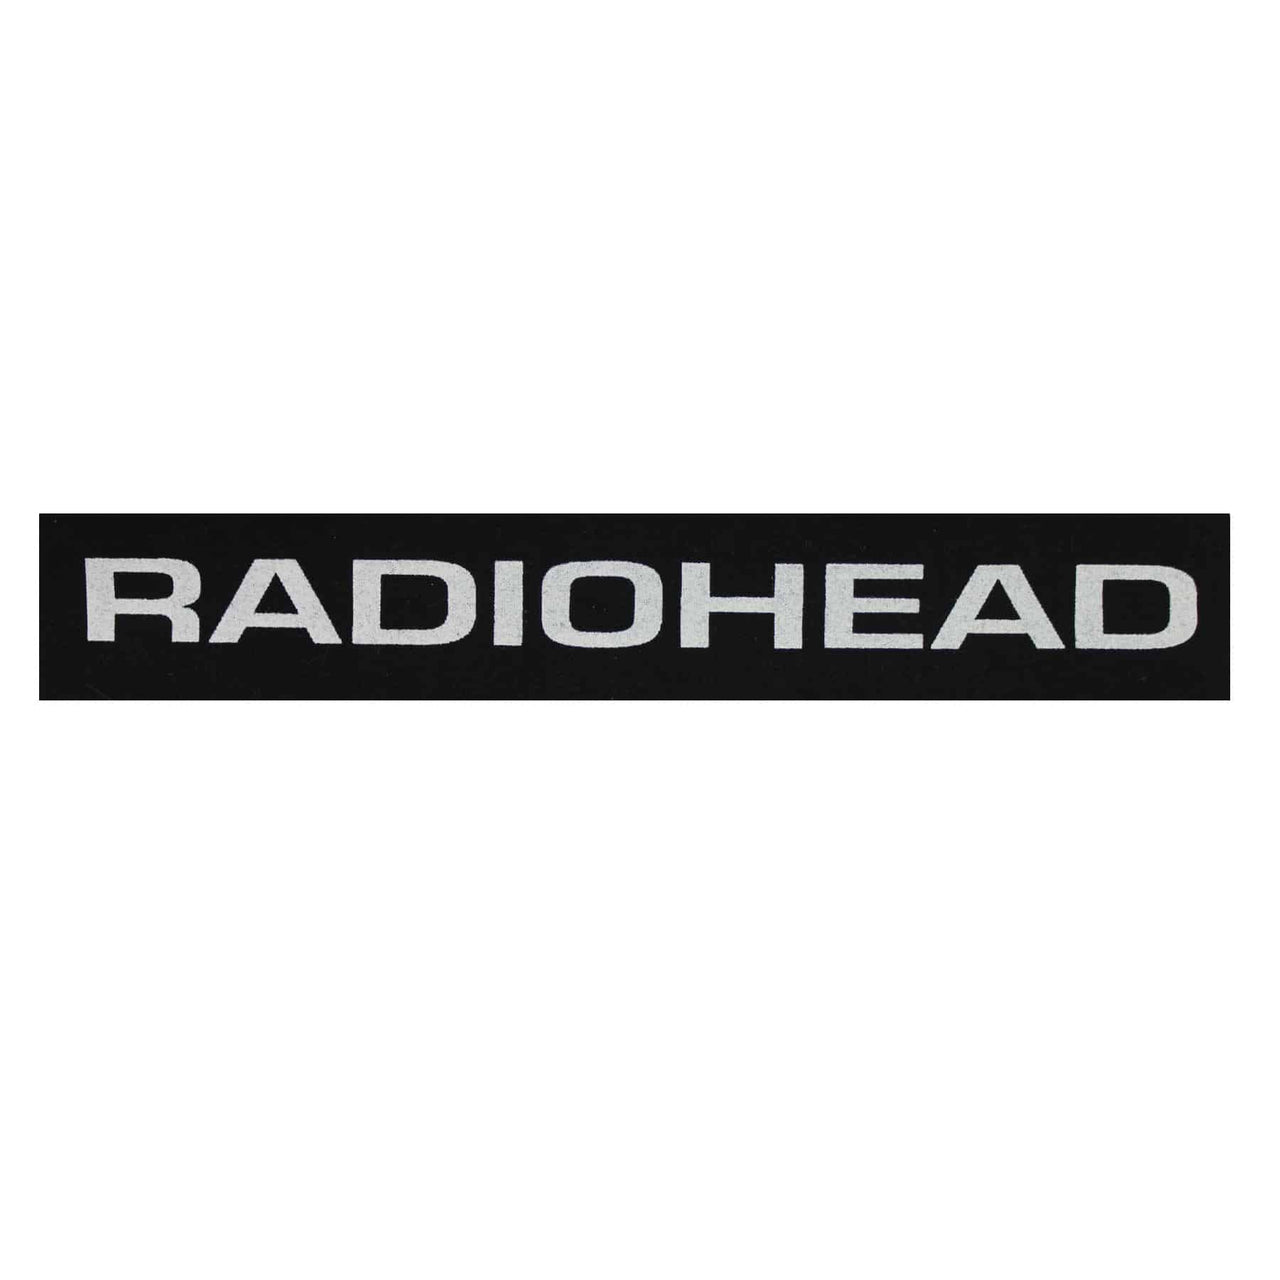 Radiohead Cloth Patch